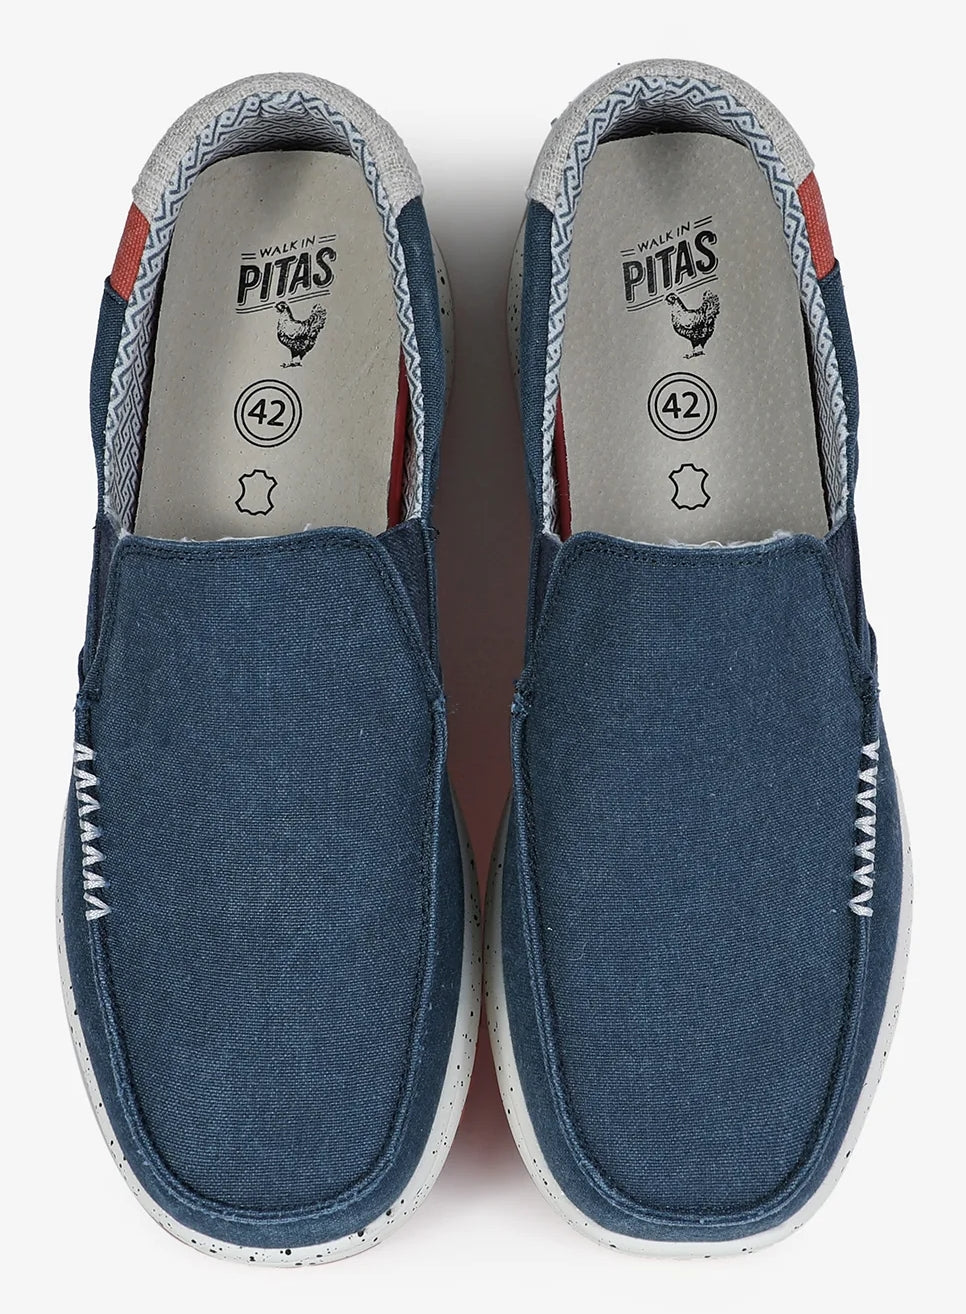 Men's slip on Itaki cotton canvas shoes from Pitas in Marino Navy Blue.